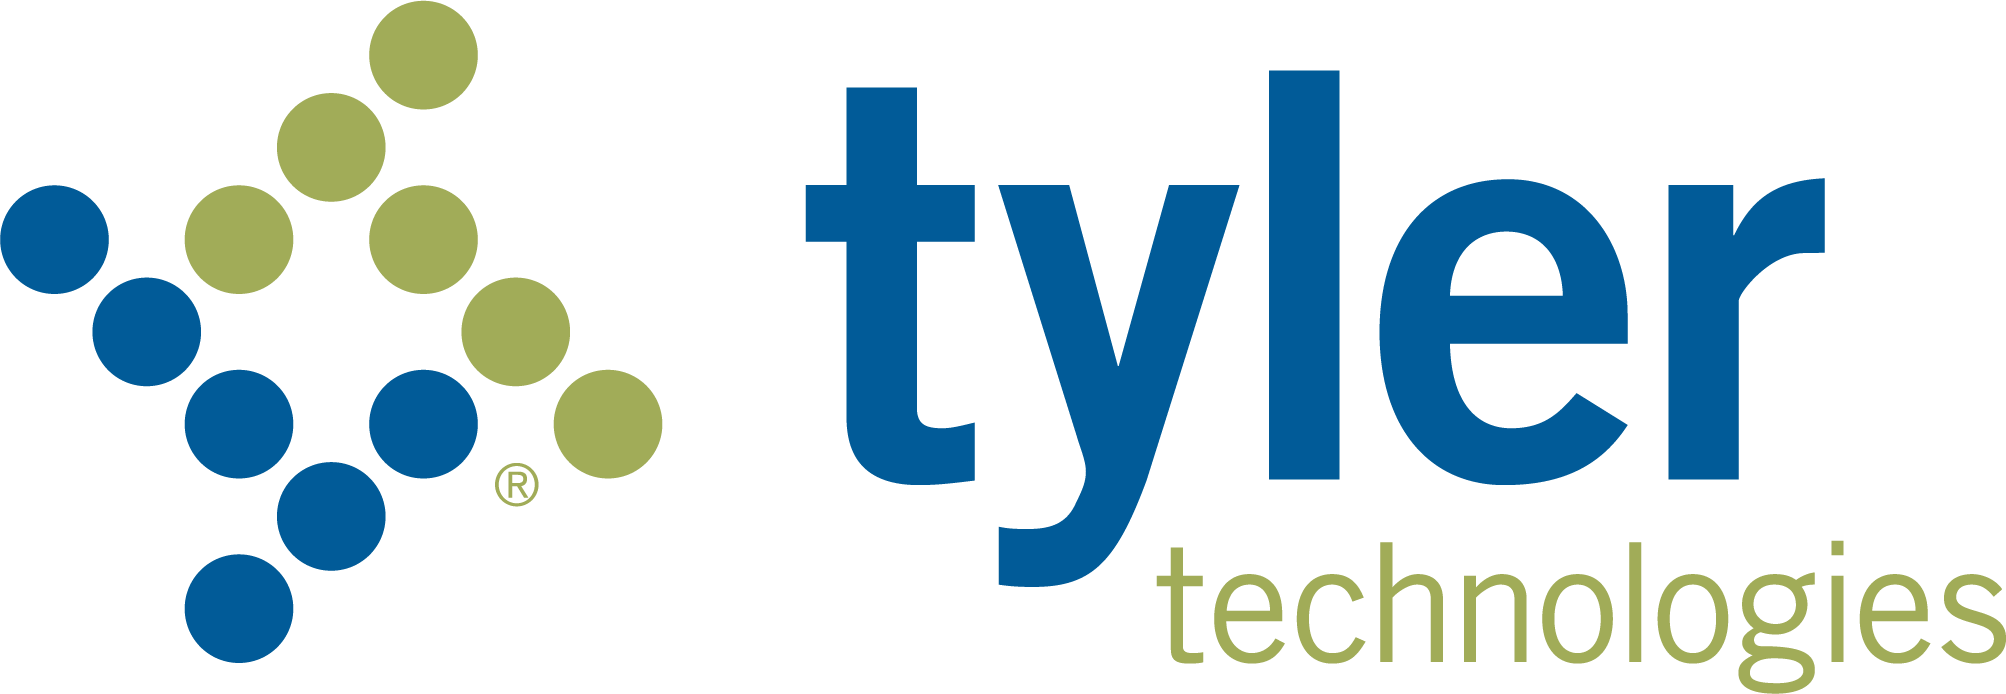 Tyler Techologies logo